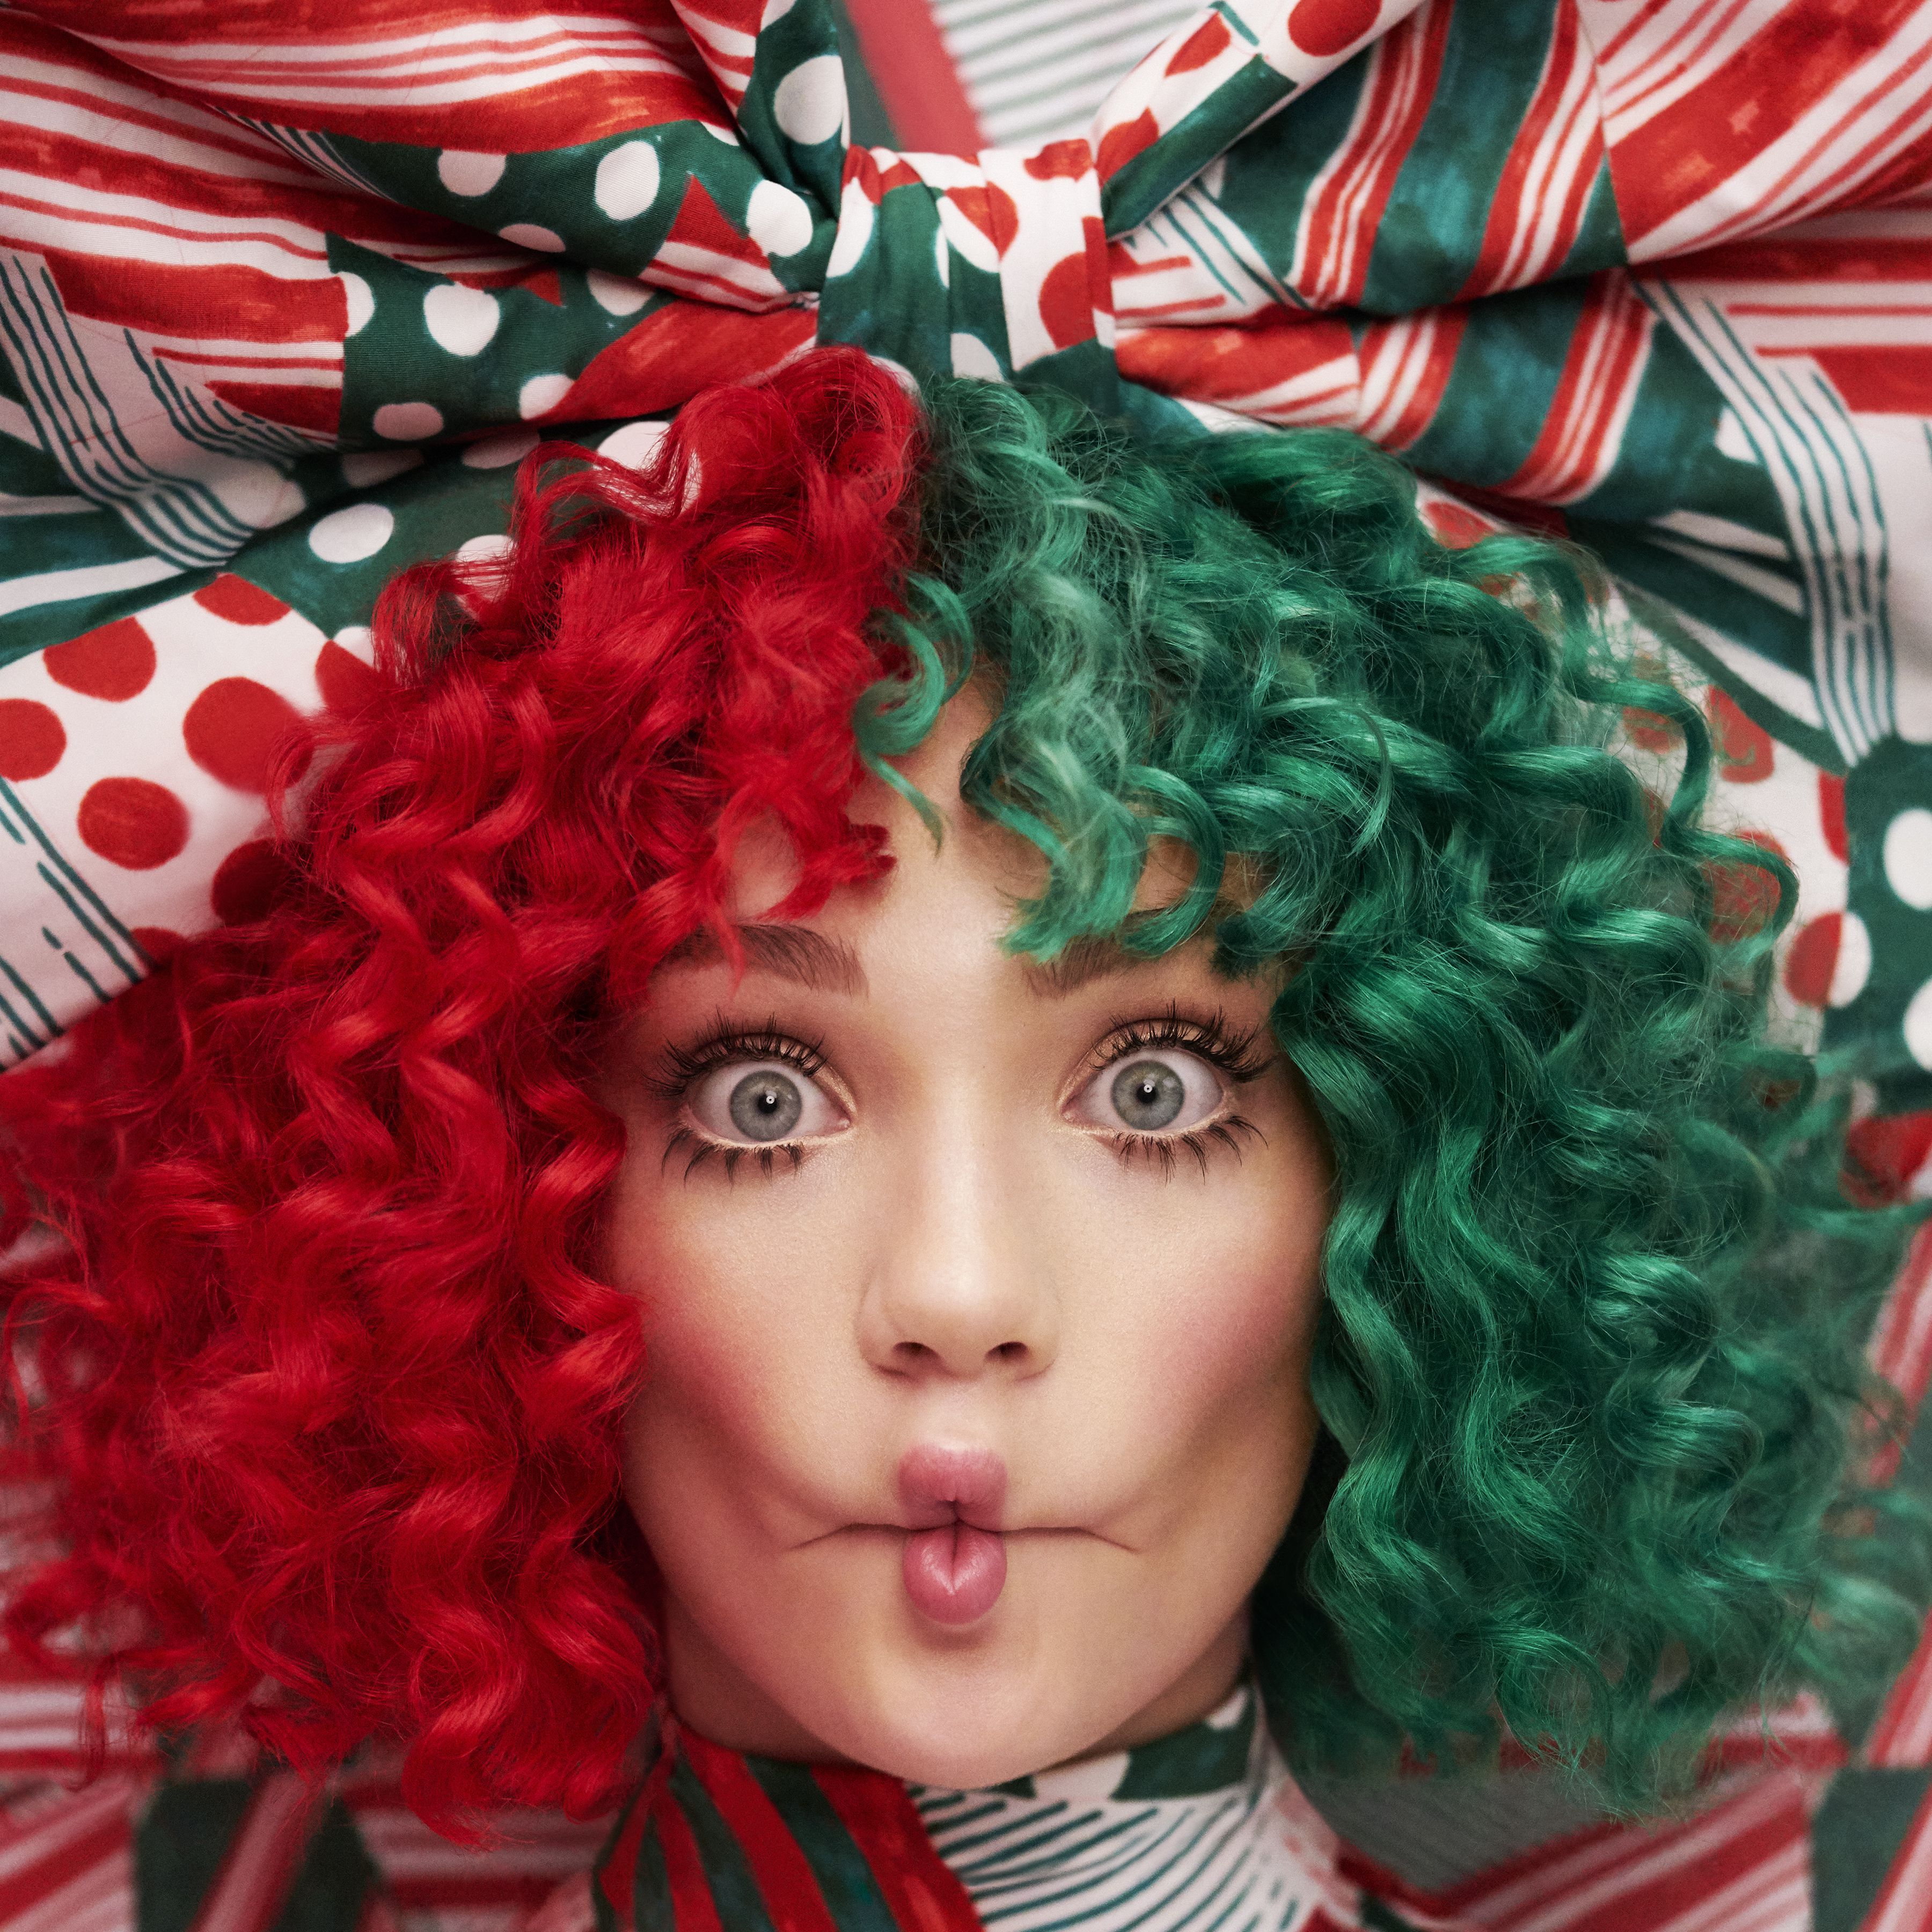 sia eic cover art Sia announces album of holiday originals, Everyday is Christmas